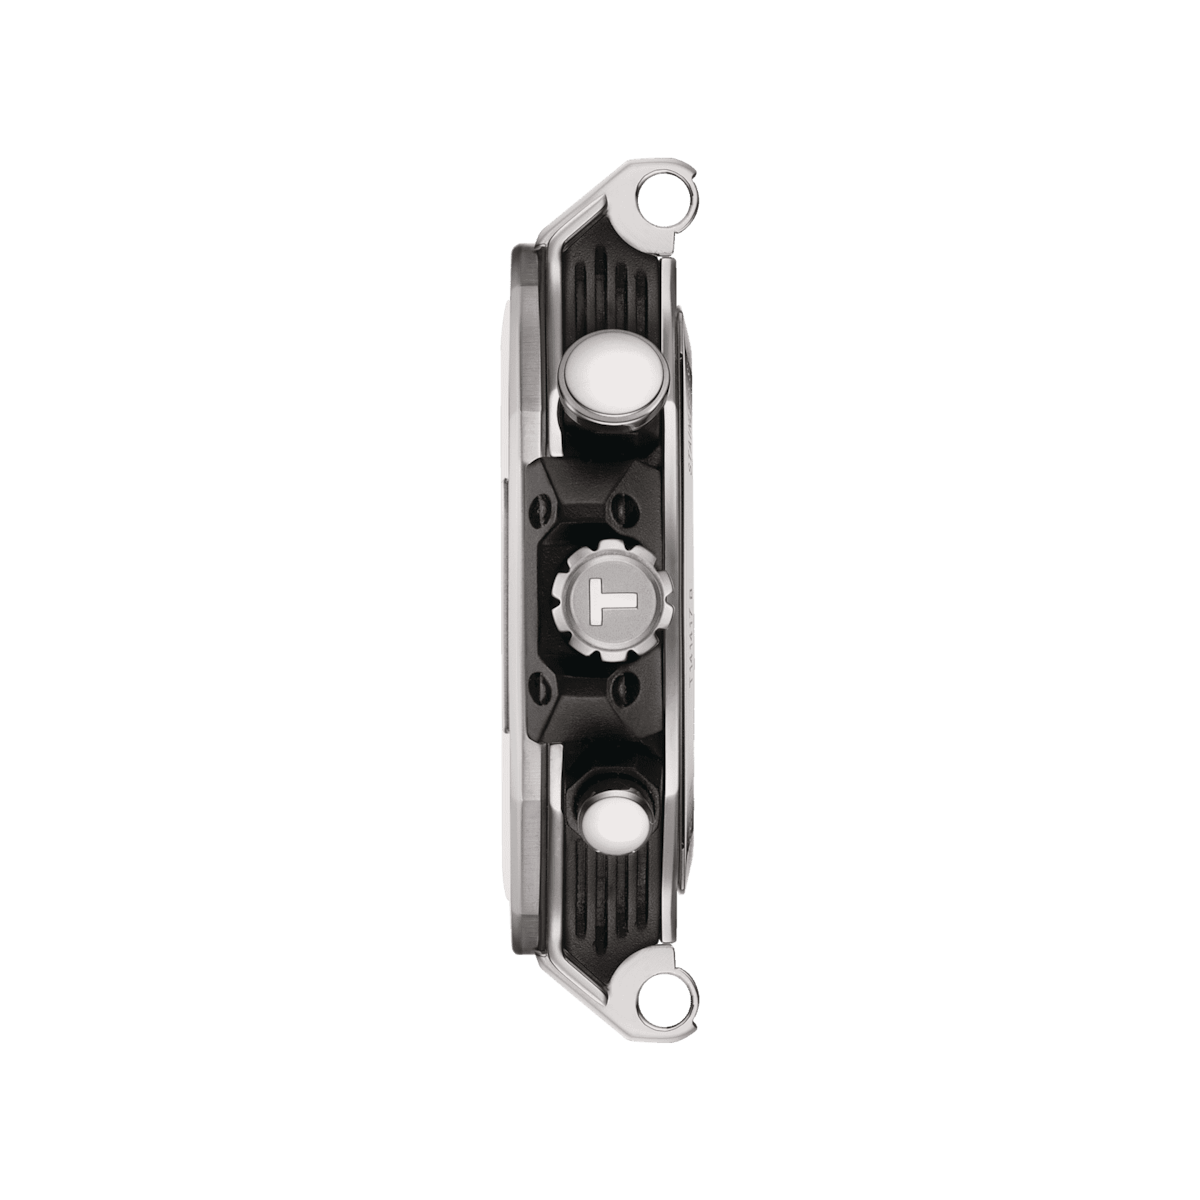 Tissot T-Race 45mm Chronograph Silver Dial Men's Watch T1414171103100